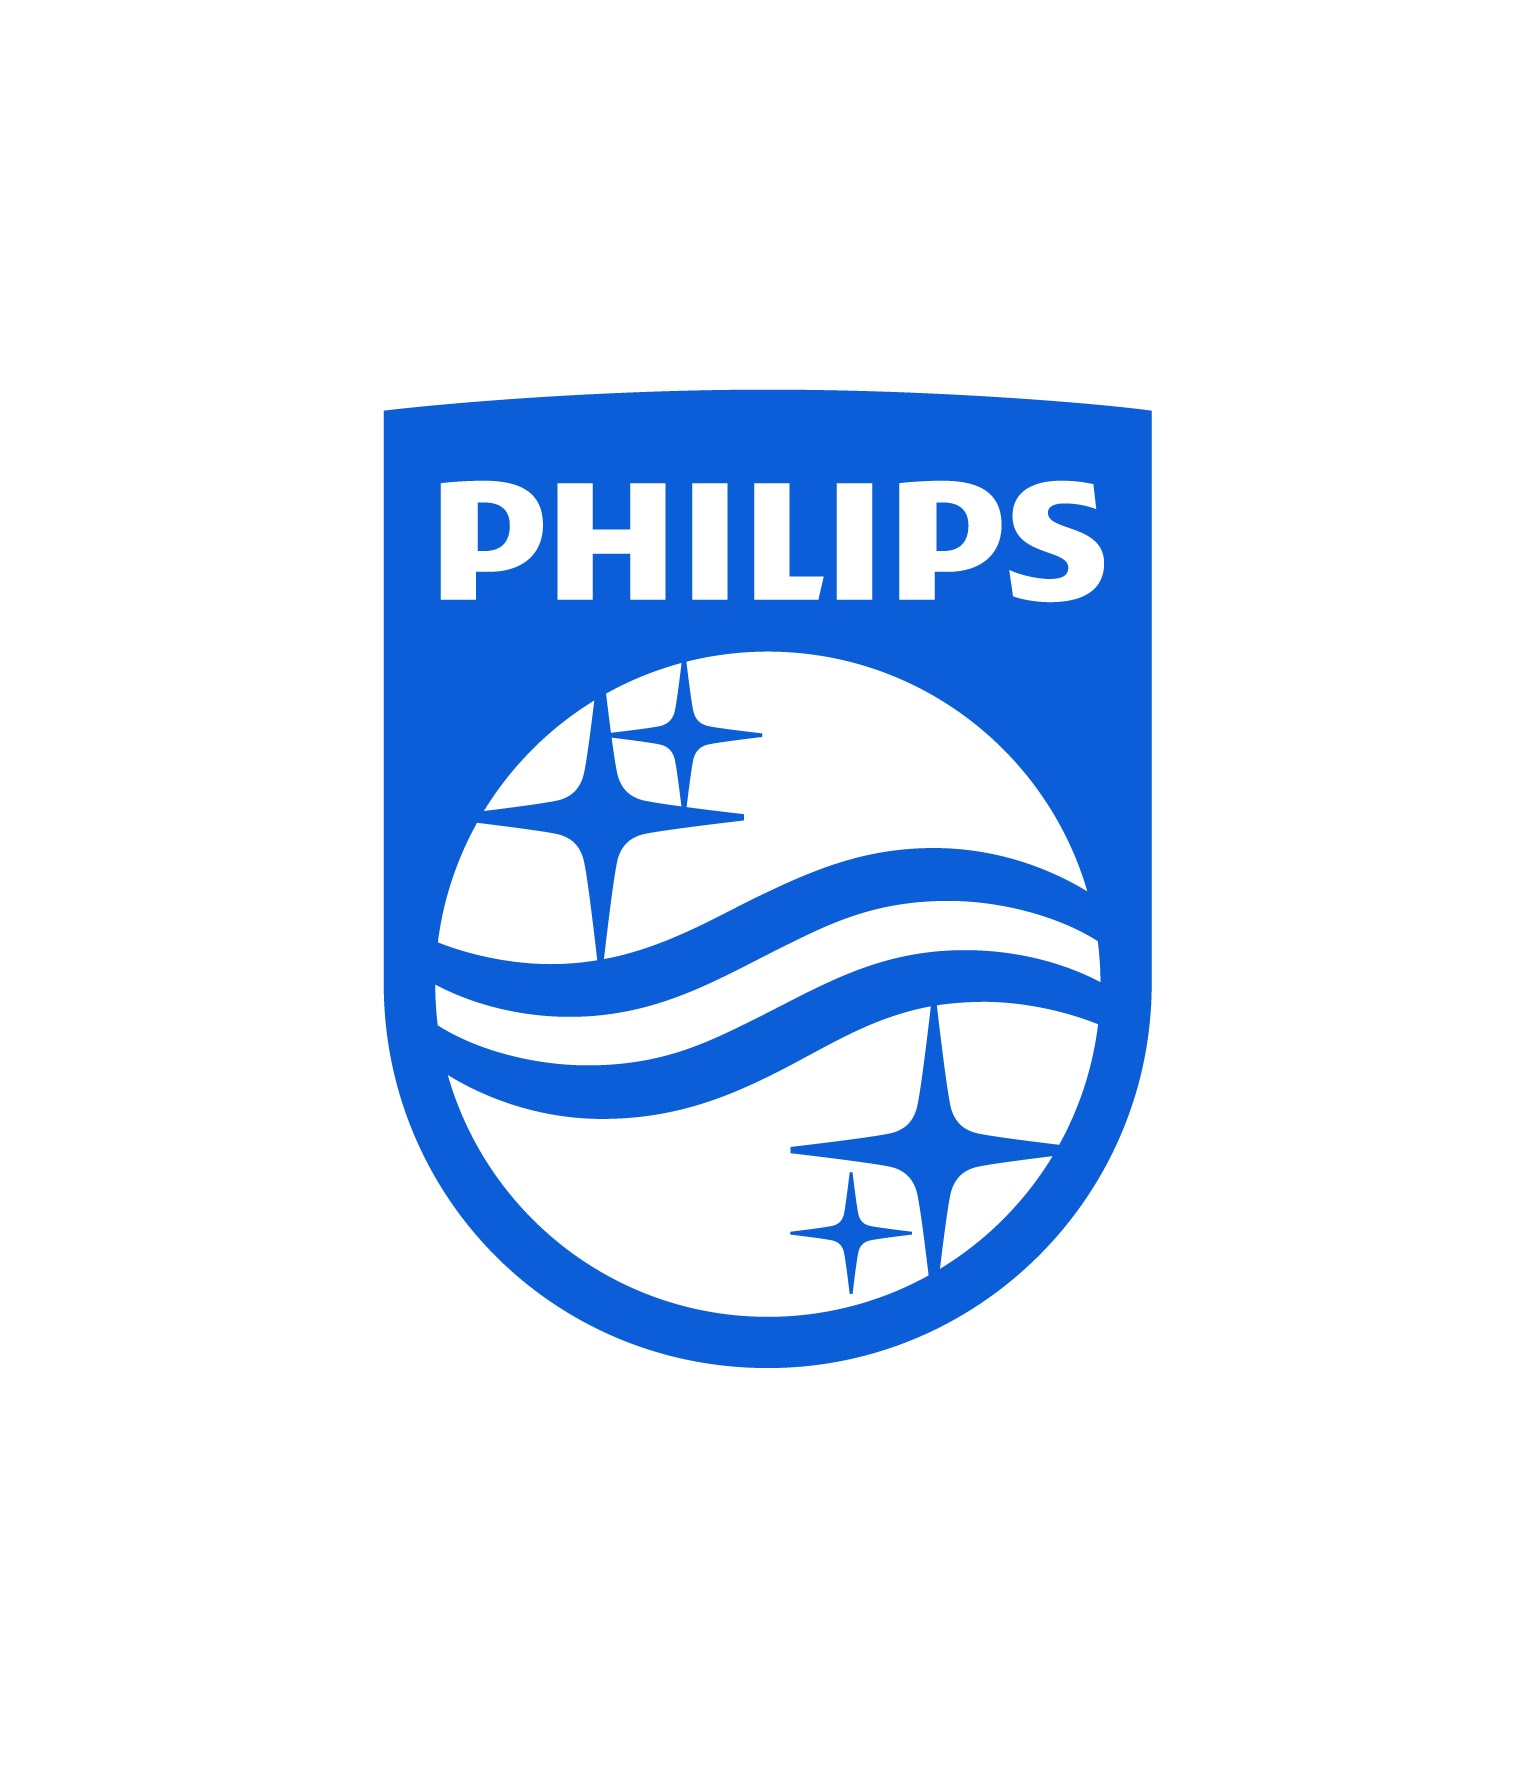 Philips – Logos Download